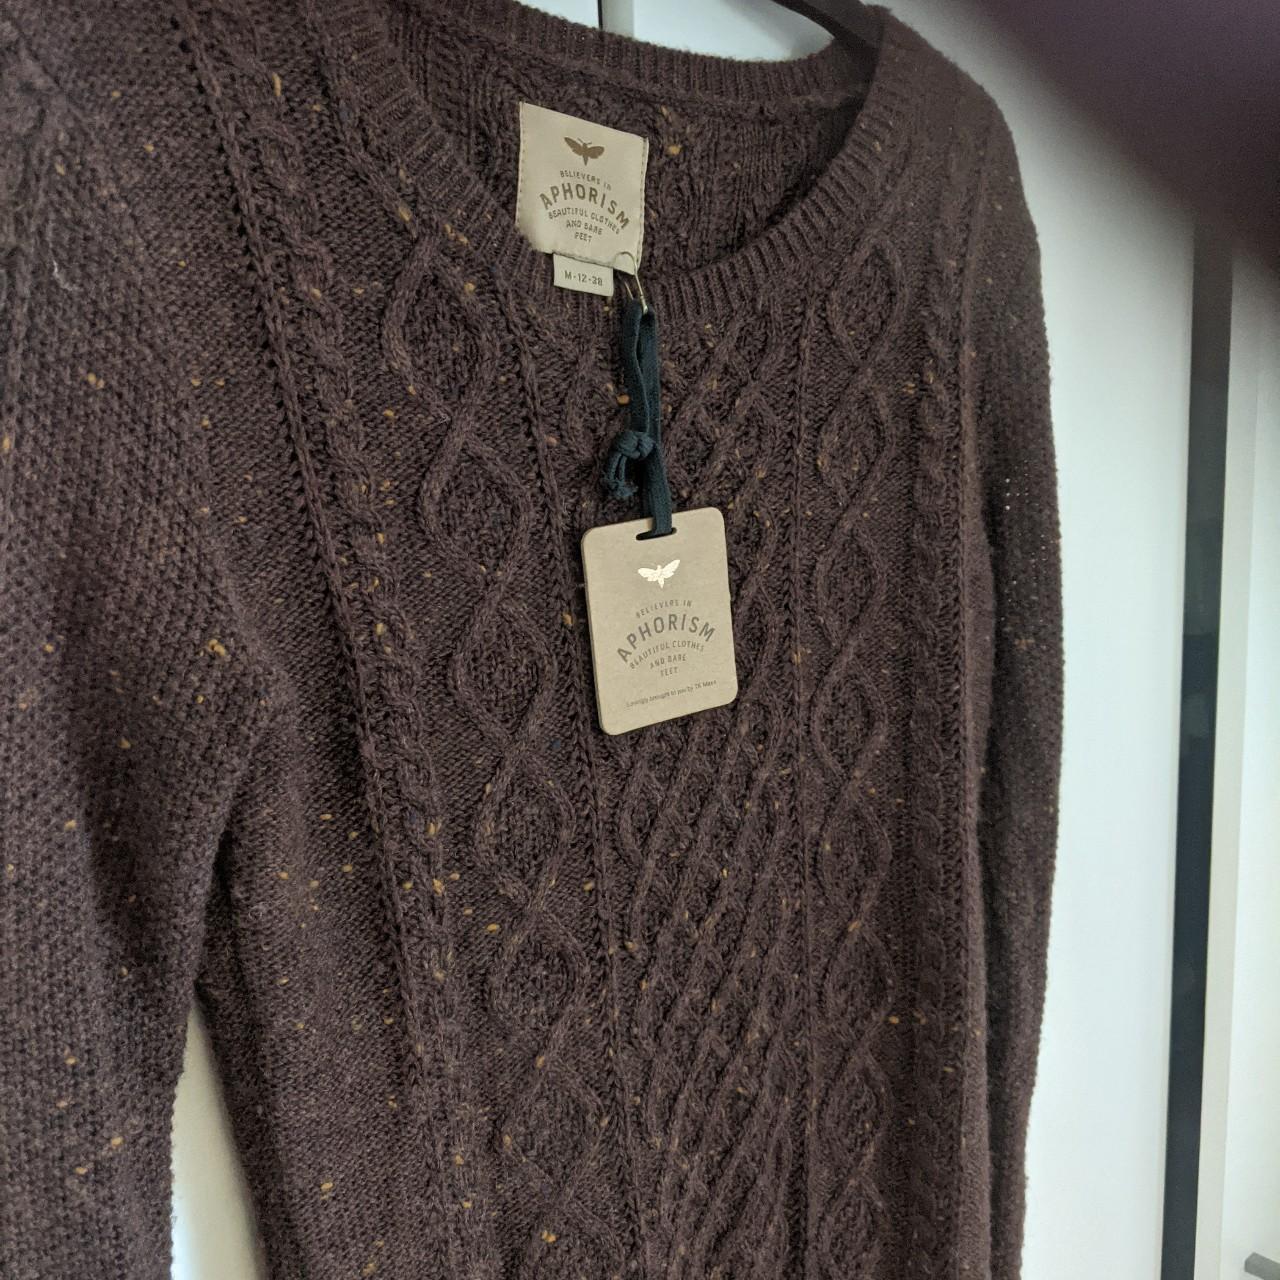 Aphorism fine cable knit brown winter jumper... - Depop